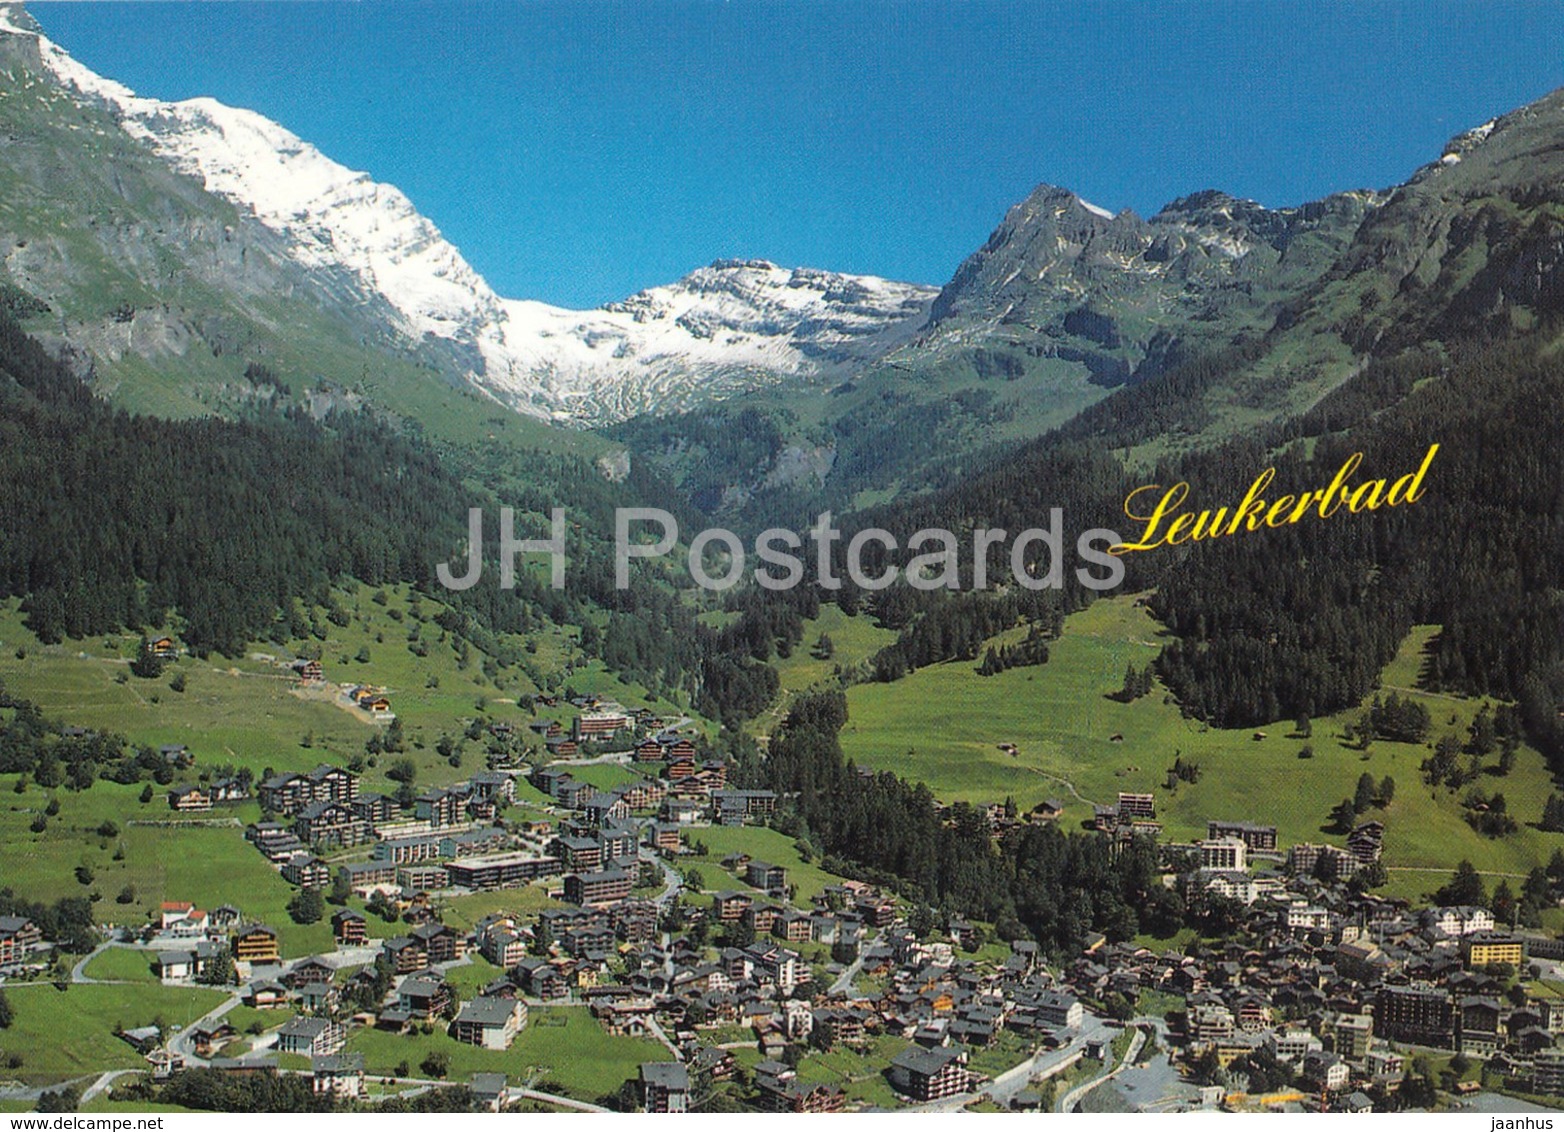 Leukerbad 1401 M - Loeche Les Bains - Balmhorn - Gizzifurgge - Ferdenrothorn - 50715 - 1997 - Switzerland - Used - Ferden